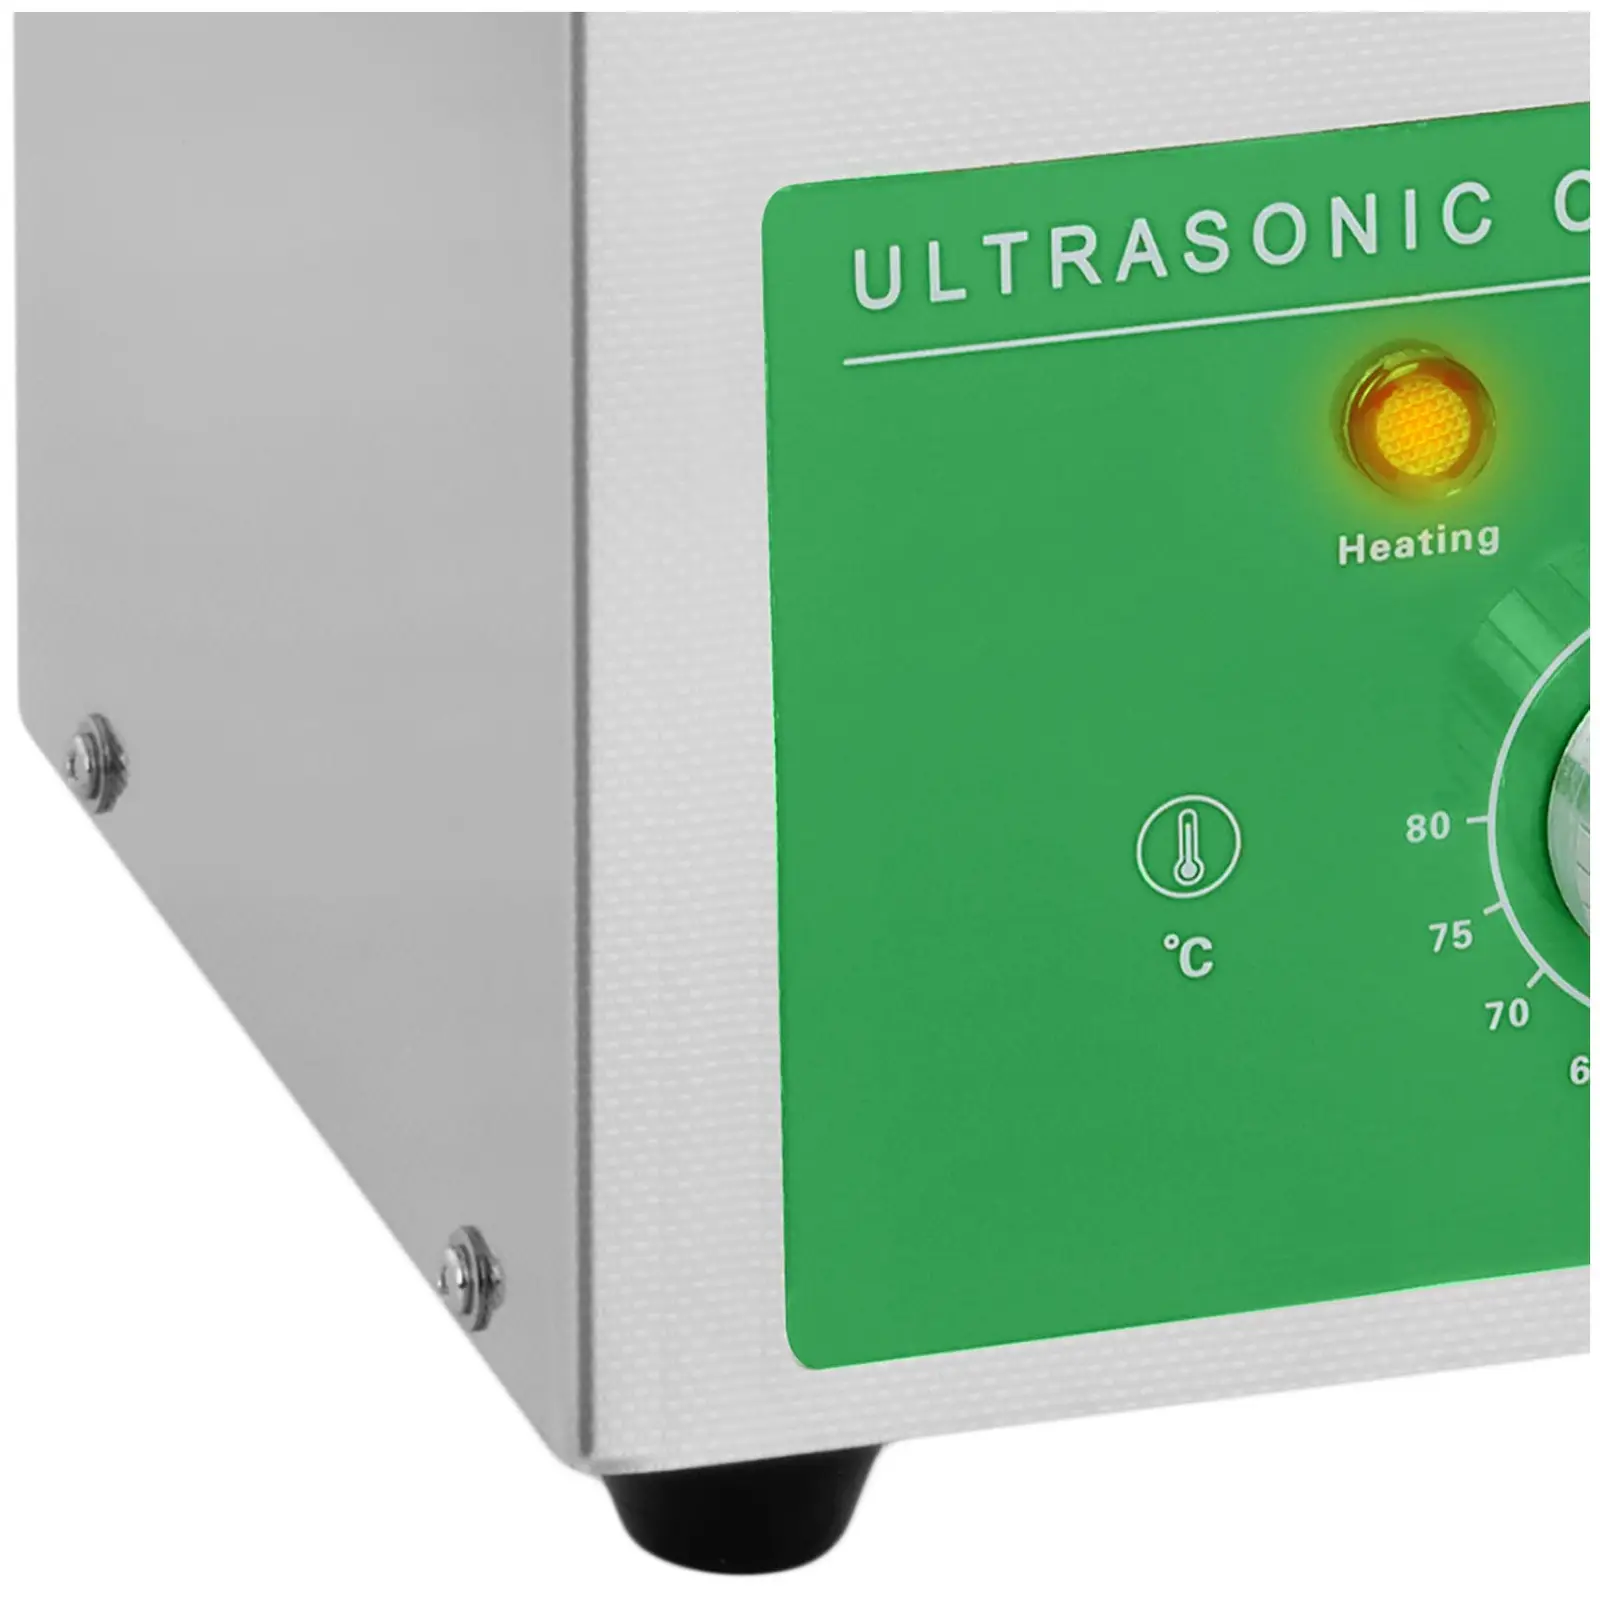 Limpiador ultrasonidos - 3 litros - 80 W - Basic Eco